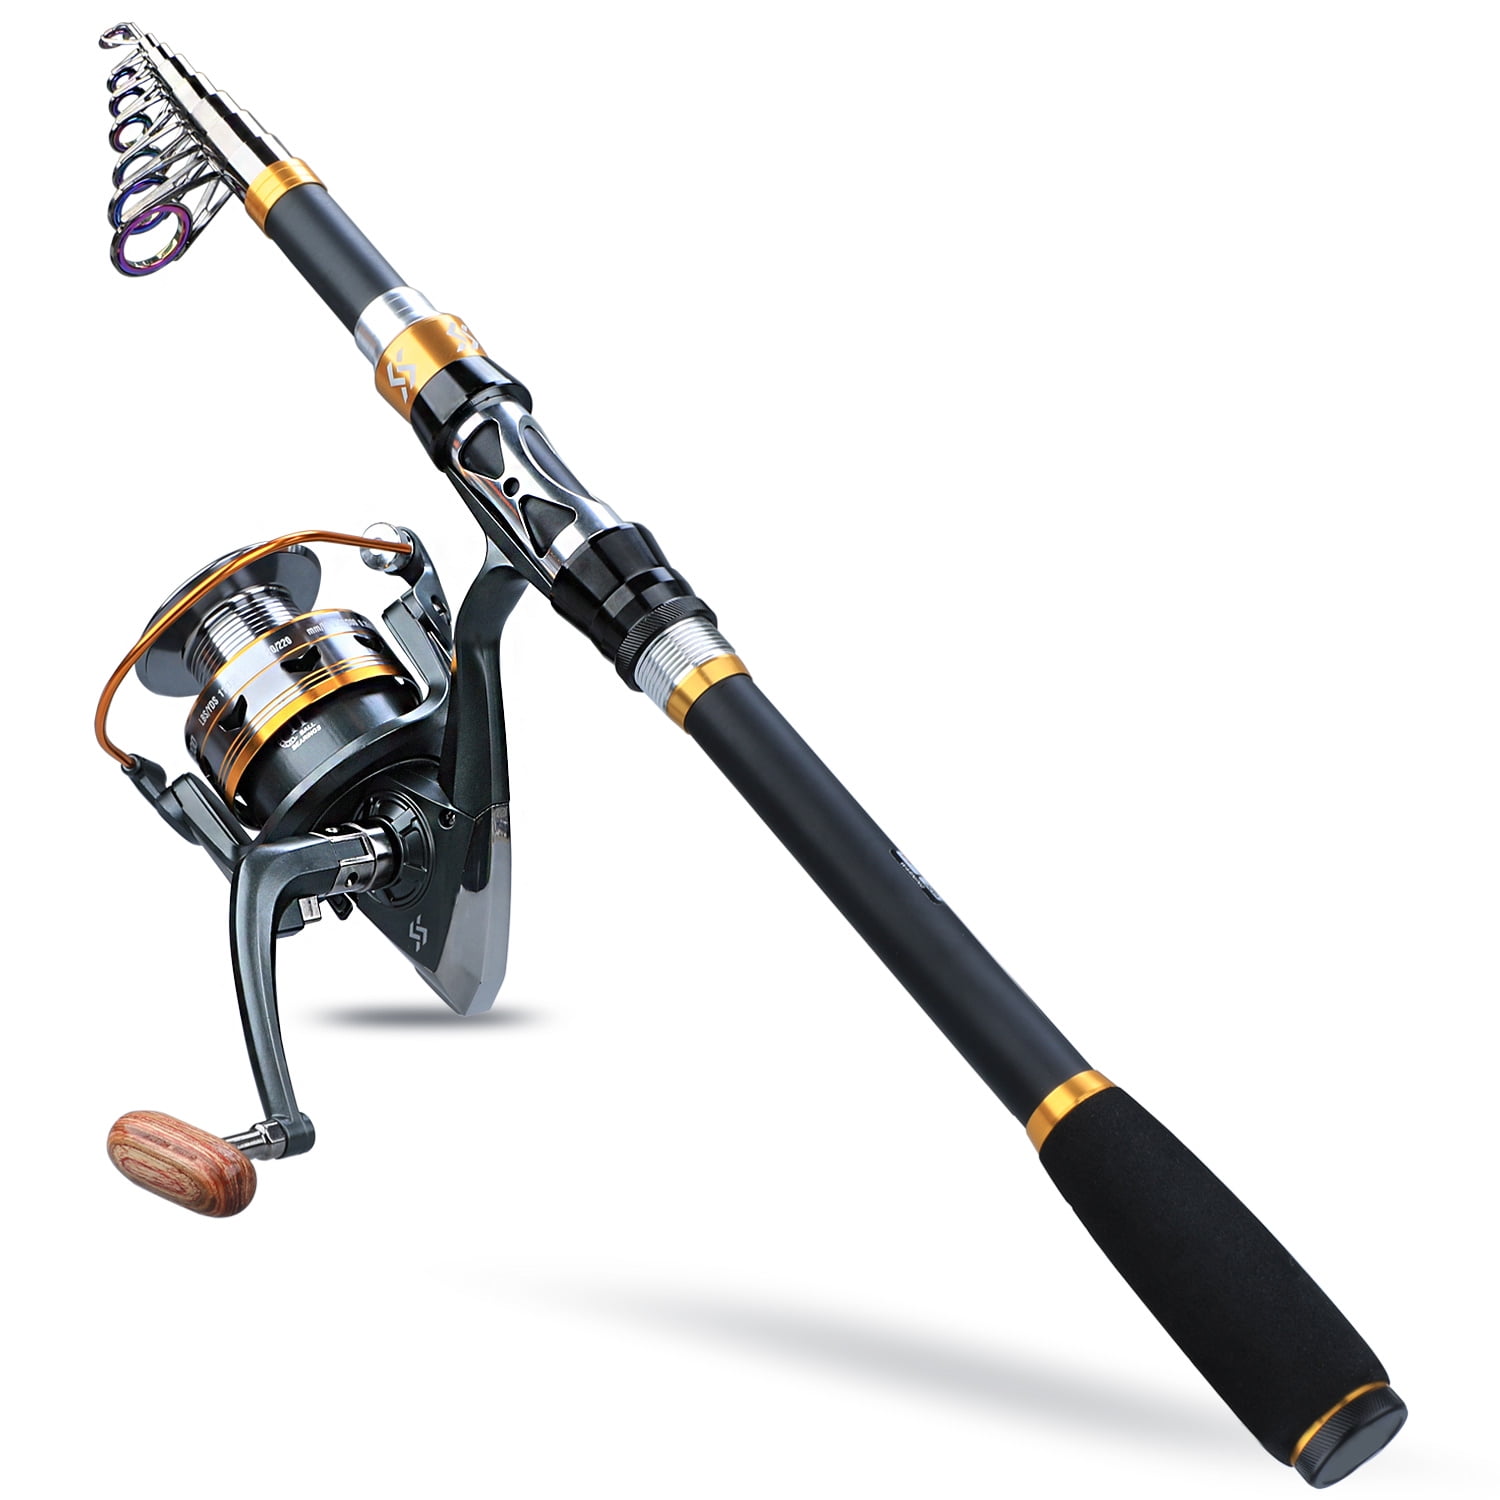 Sougayilang Telescopic Fishing Rod and Spinning Fishing Reel Combo